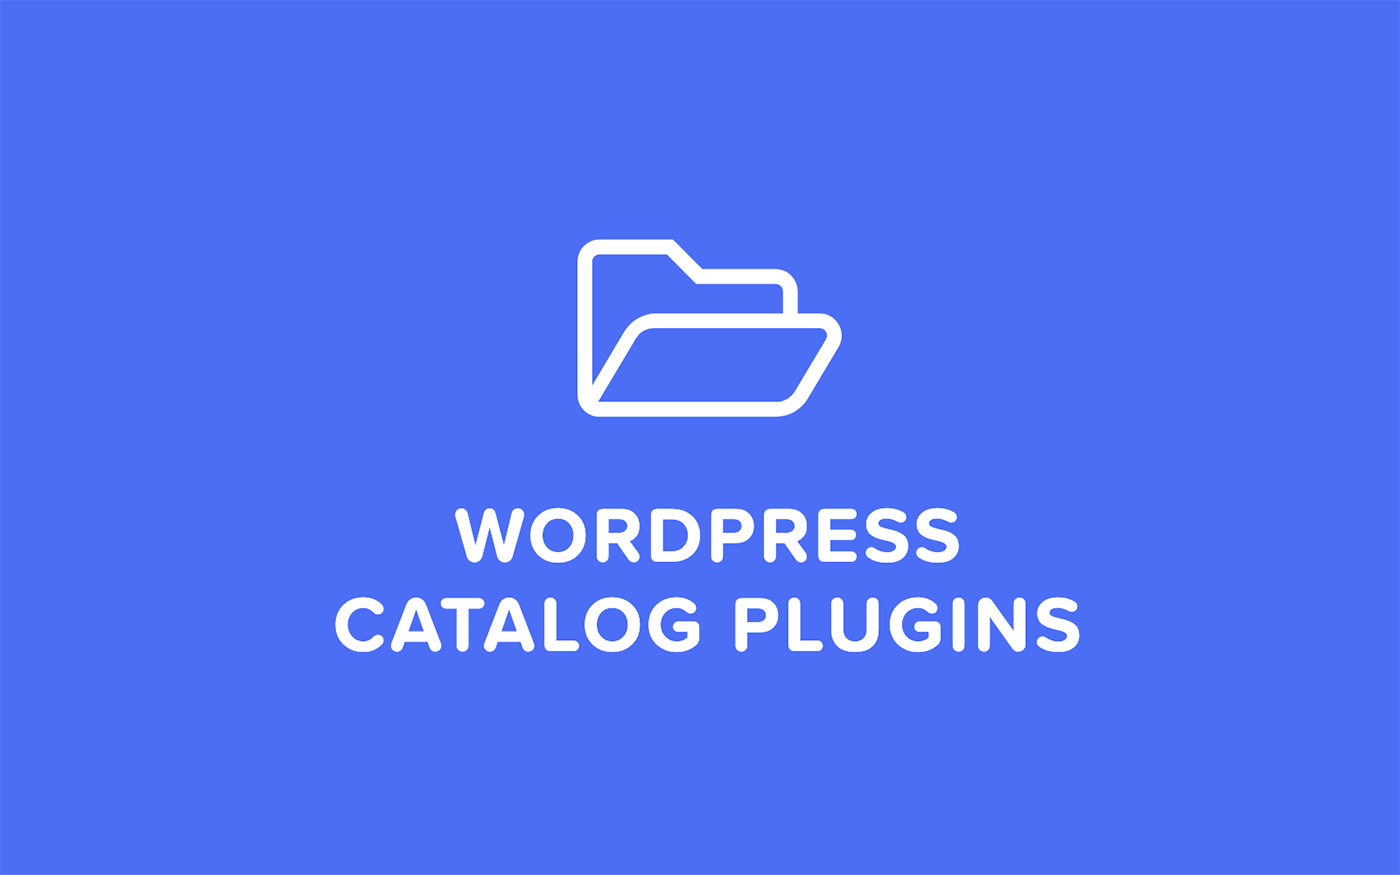 WordPress Catalog Plugins